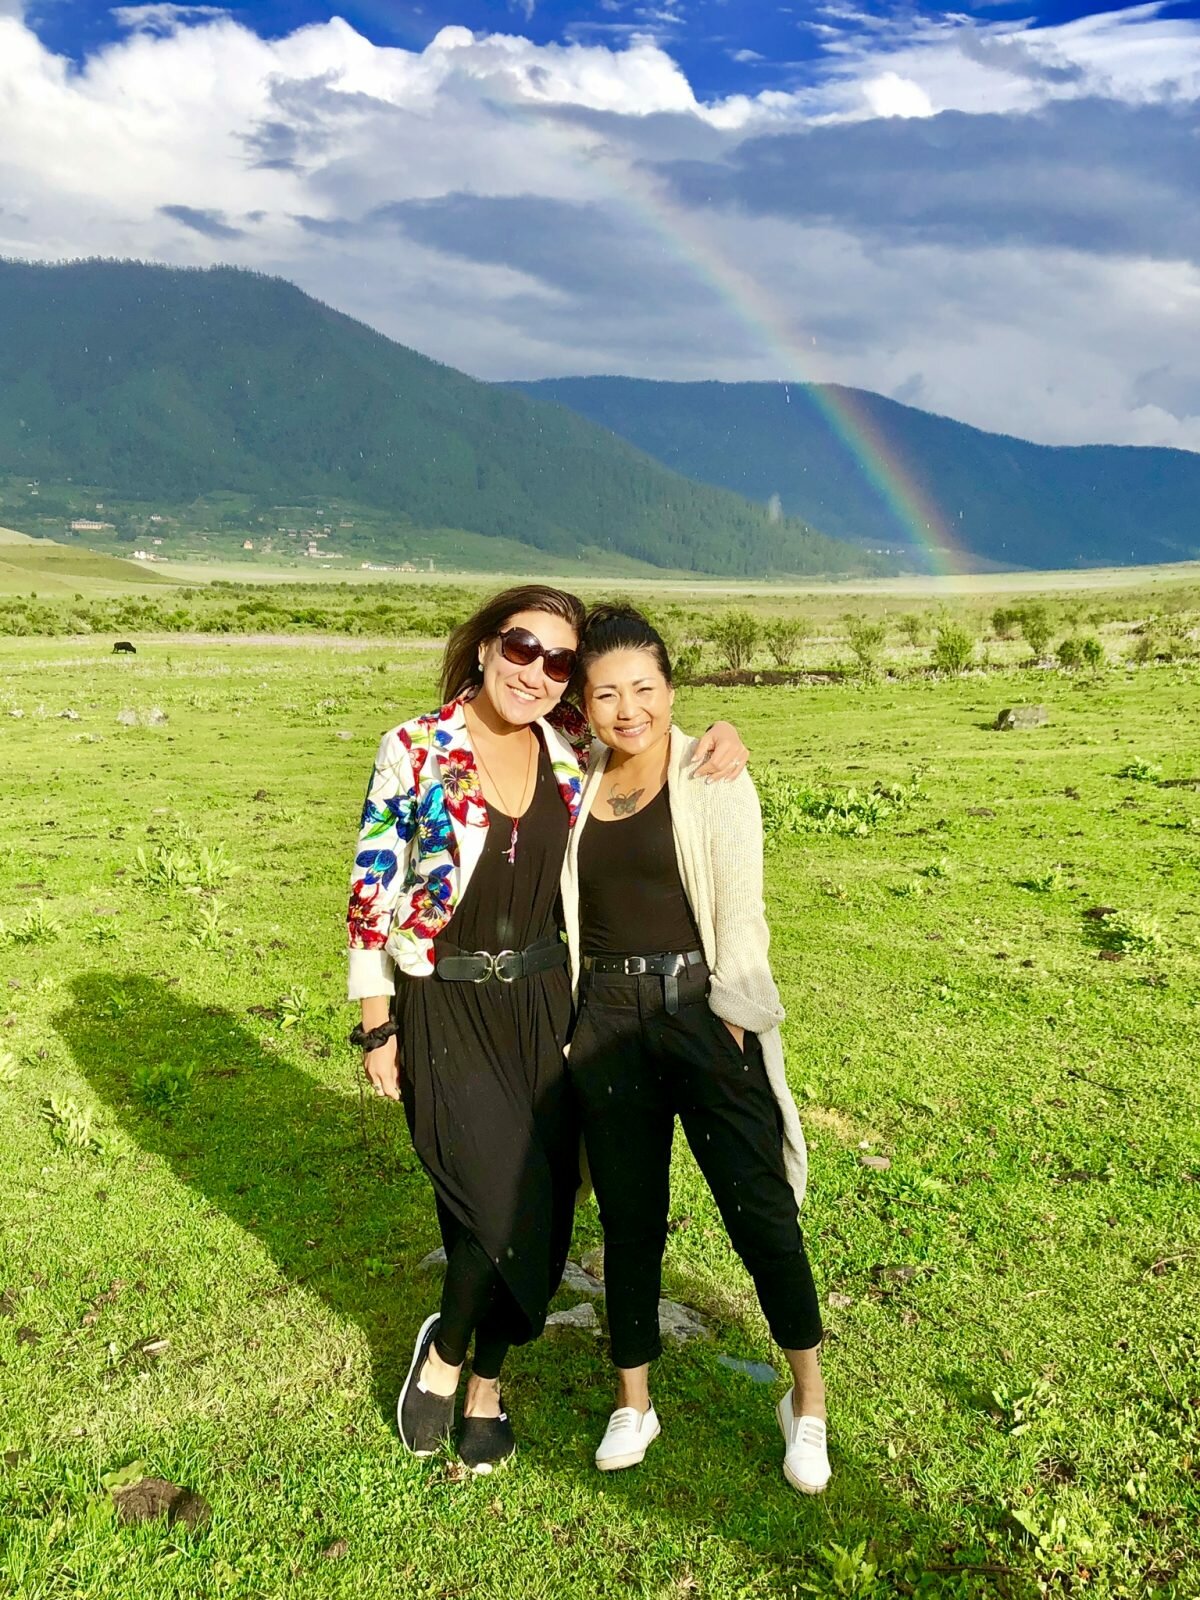 Has Filmmaker Loretta Chen Found The Secret To Happiness In Bhutan?